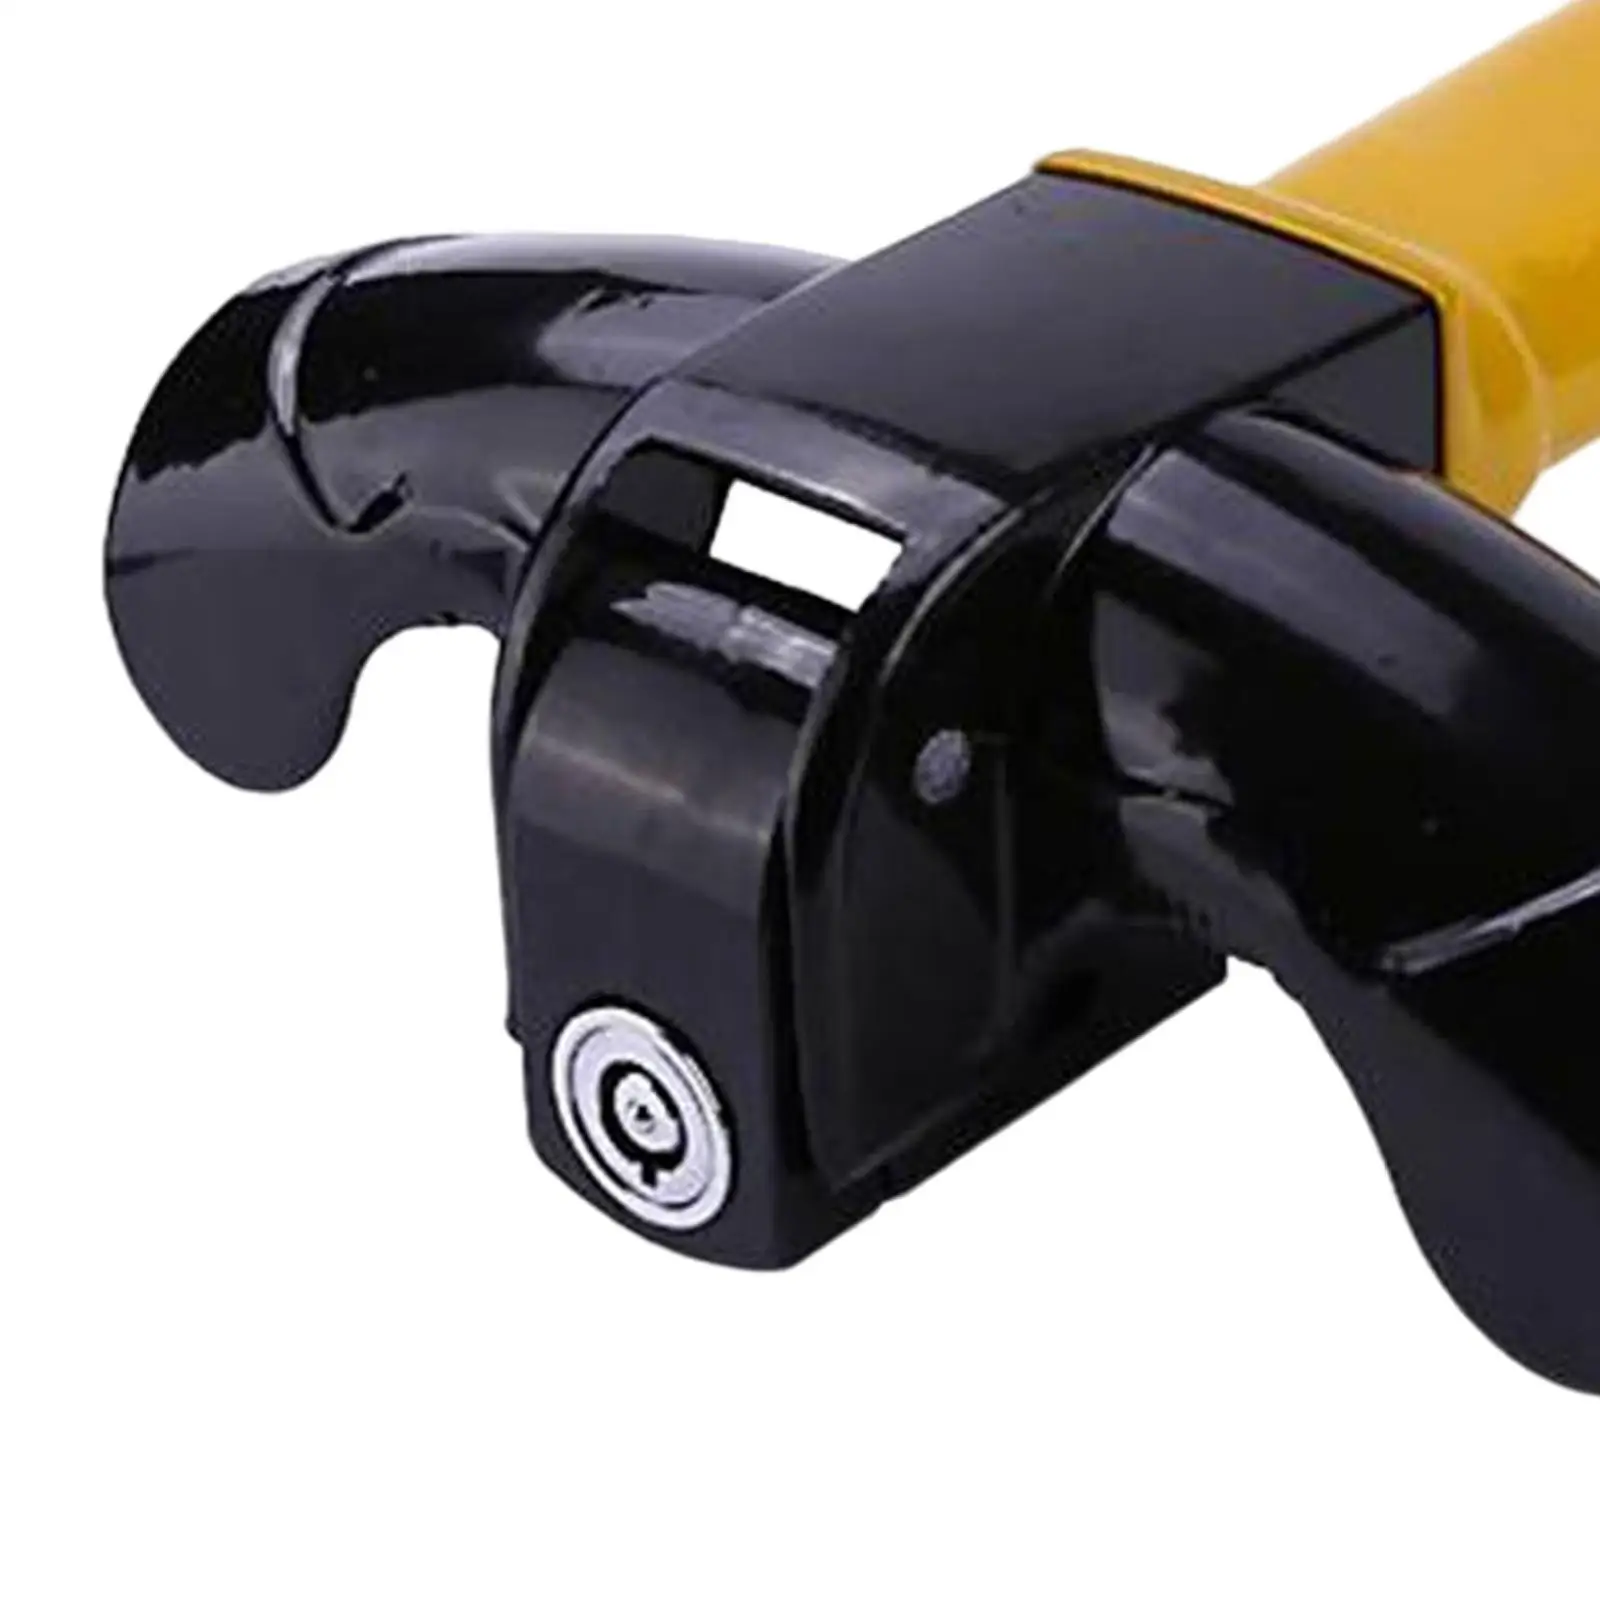 Automotive Steering Wheel Lock Tool with 2x Keys Sturdy Comfortable Handle Heavy Duty Security Lock Universal for Truck Van